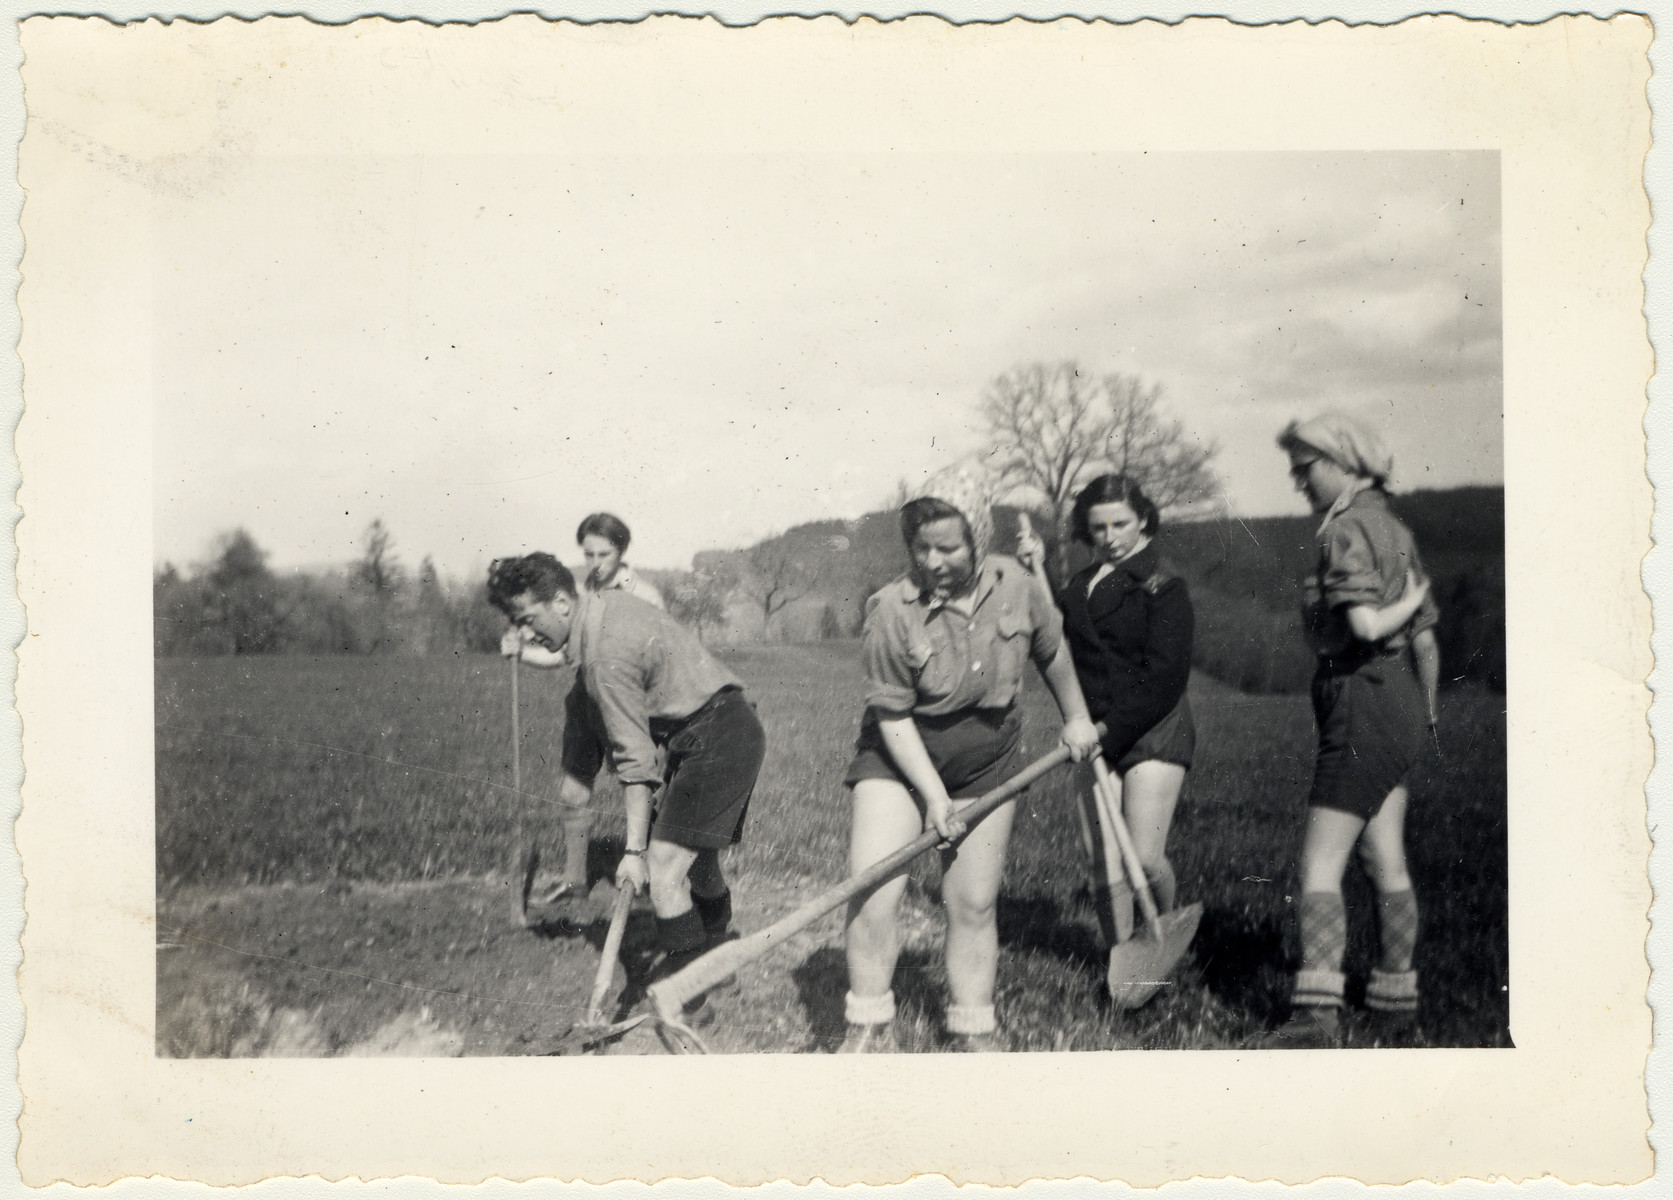 Joseph Protter, Regina Gelbart, Rudi, Minni, and Sitta, members of a Zionist youth movement, work in the fields.